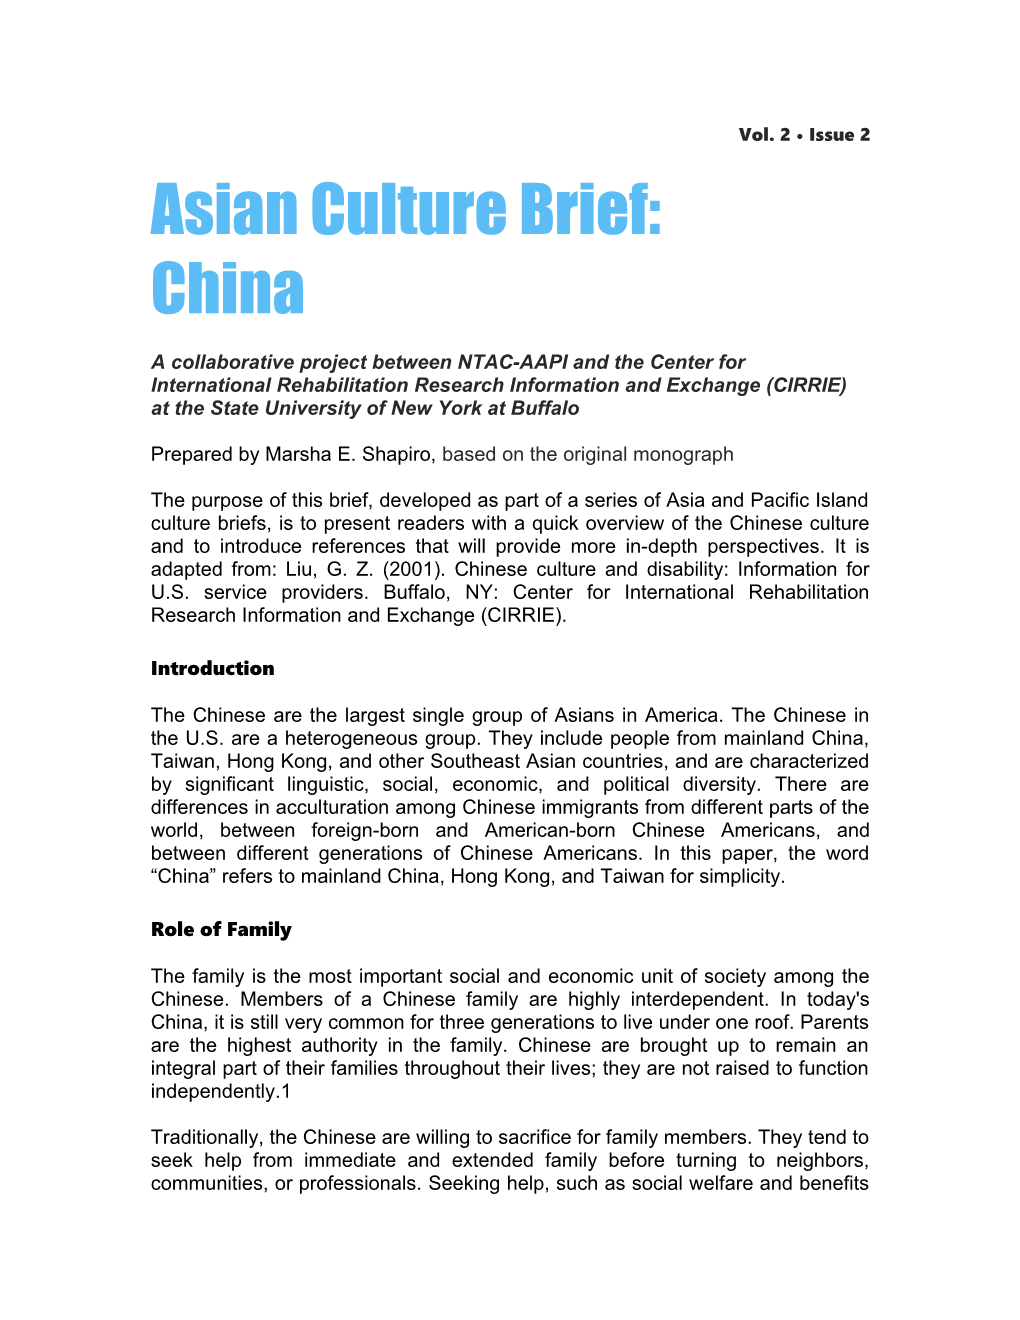 Asian Culture Brief